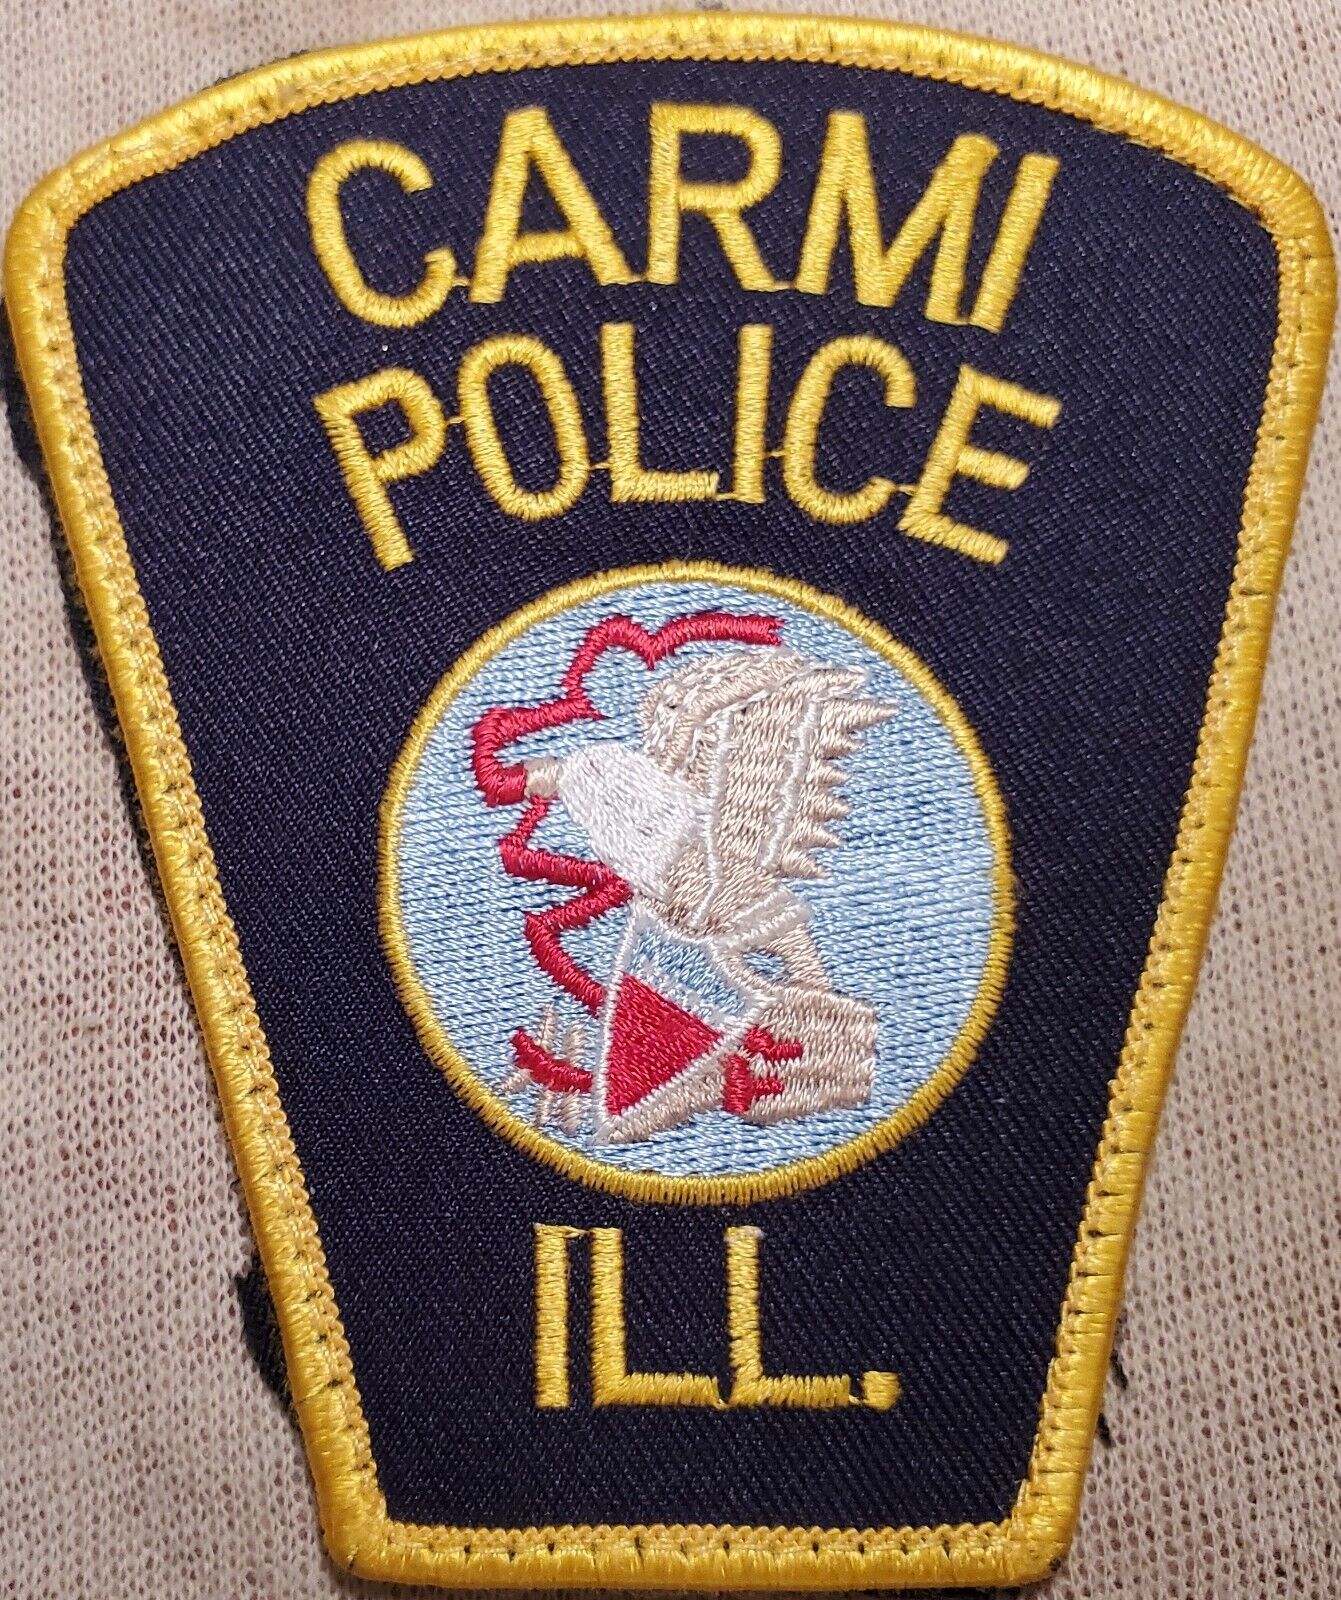 IL Carmi Illinois Police Shoulder Patch